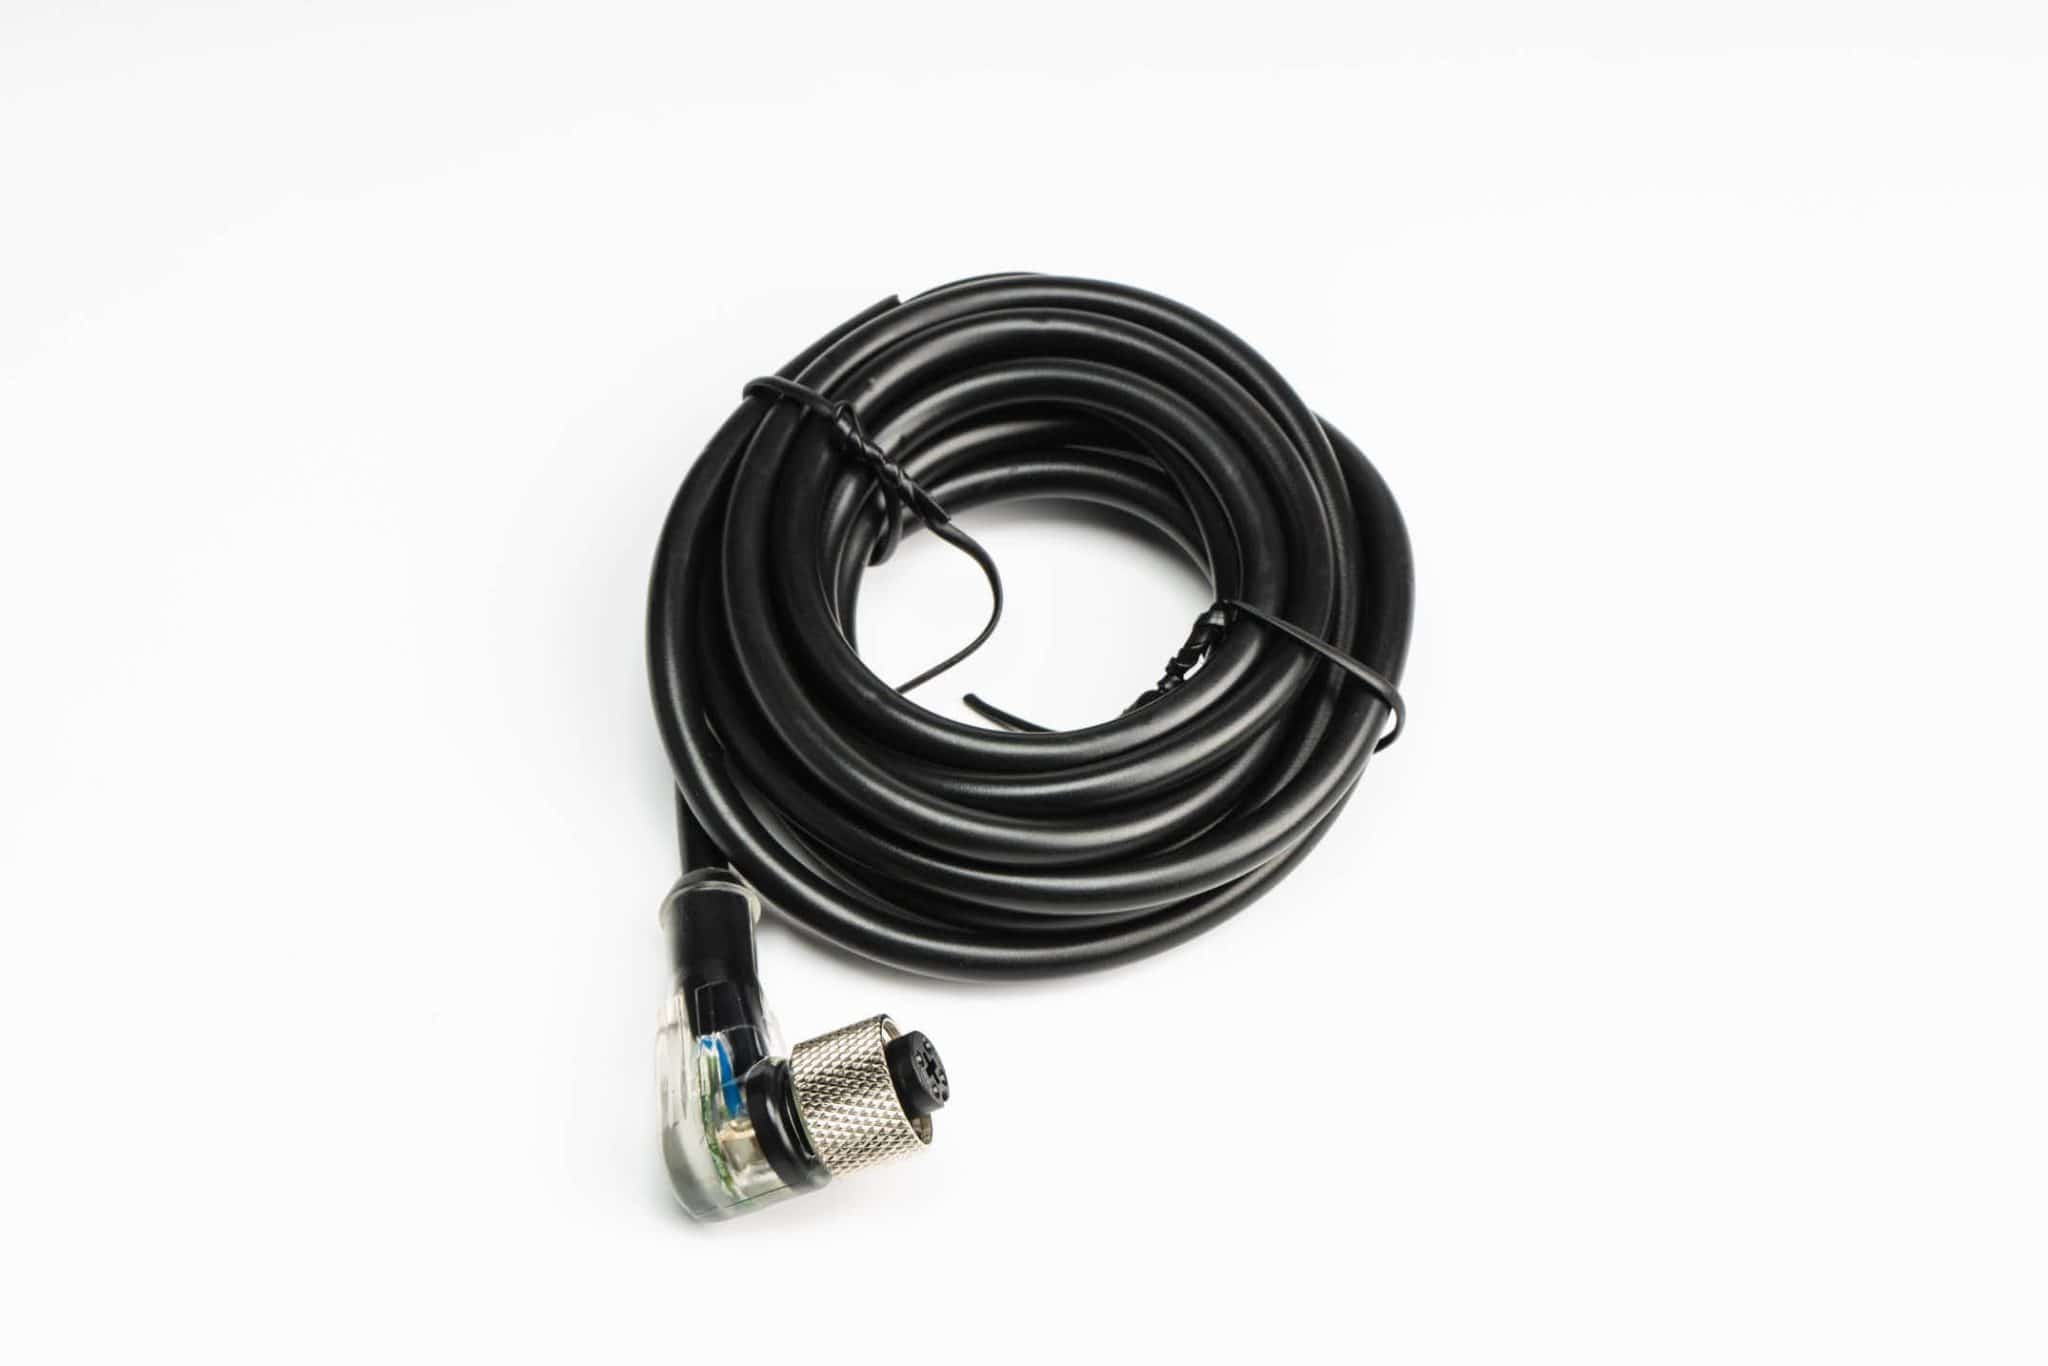 sensor kabel